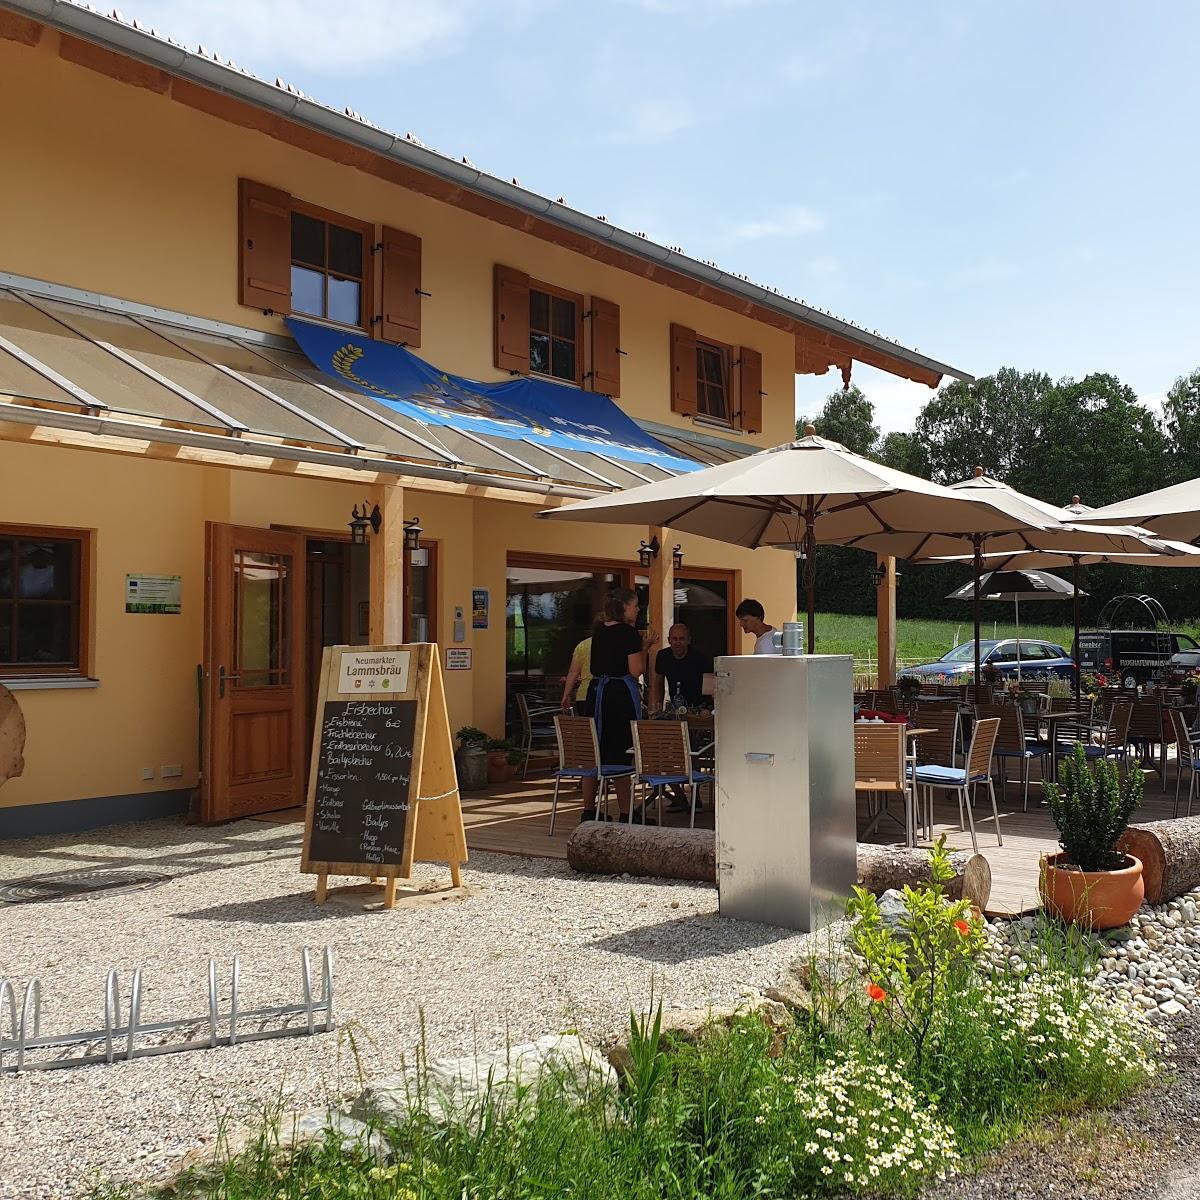 Restaurant "Finkennest - Simon Fink" in Schonstett